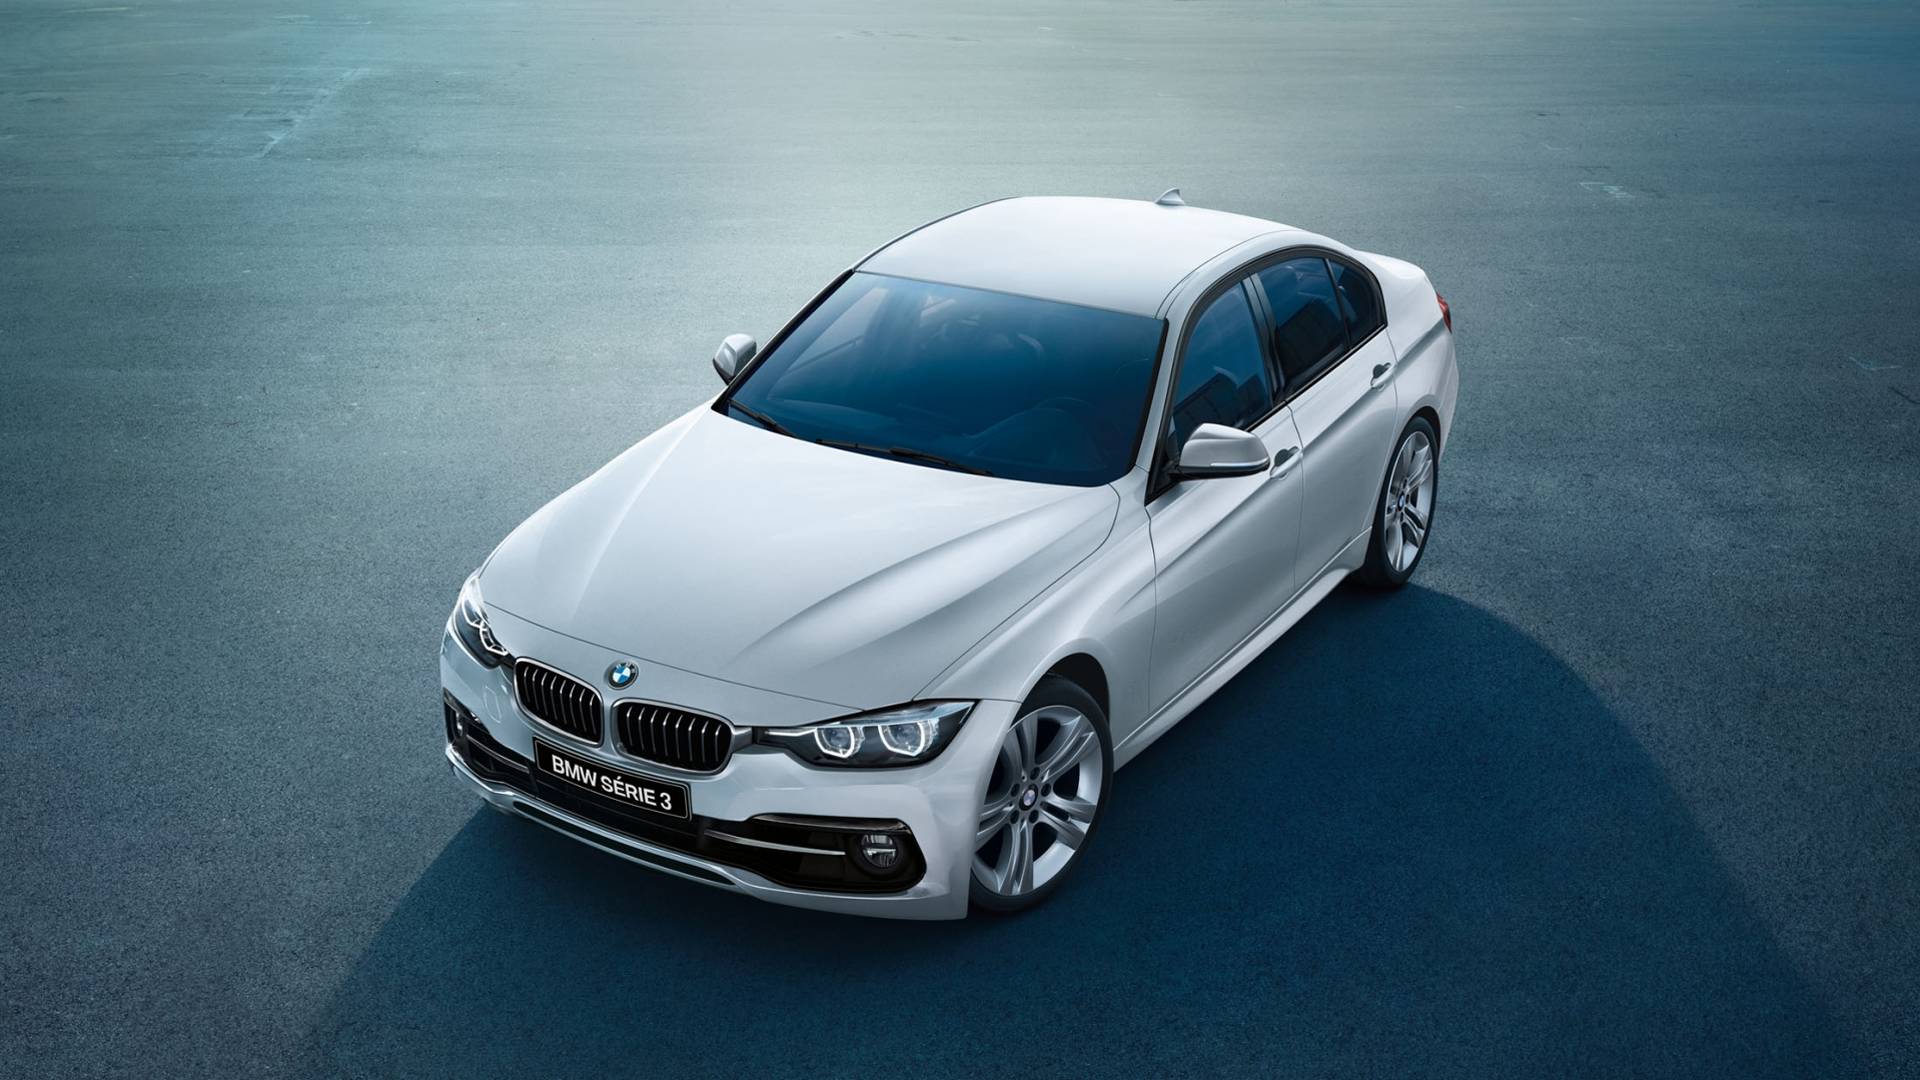 BMW Série 3 2018